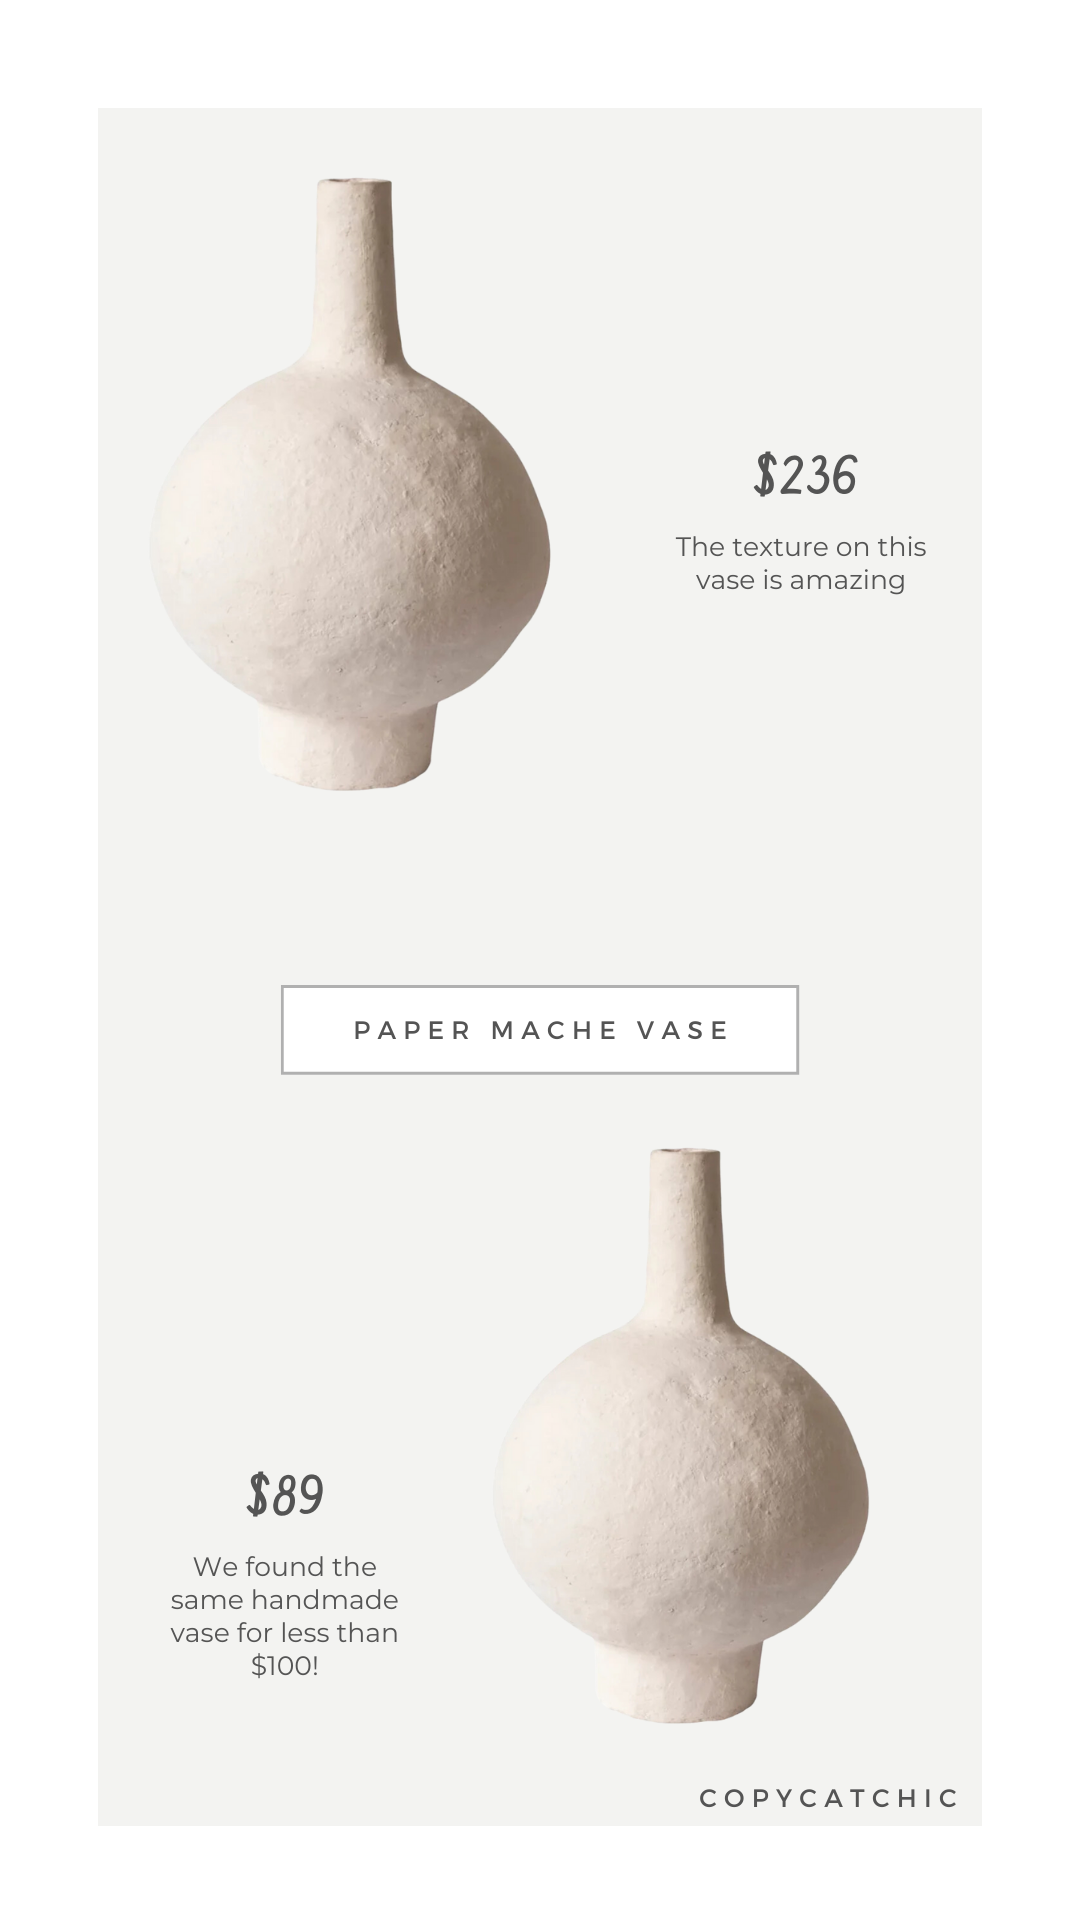 Look for Less: Julie & Dev Handmade Paper Mache Vase vs Houzz Handmade Paper Mache Vase